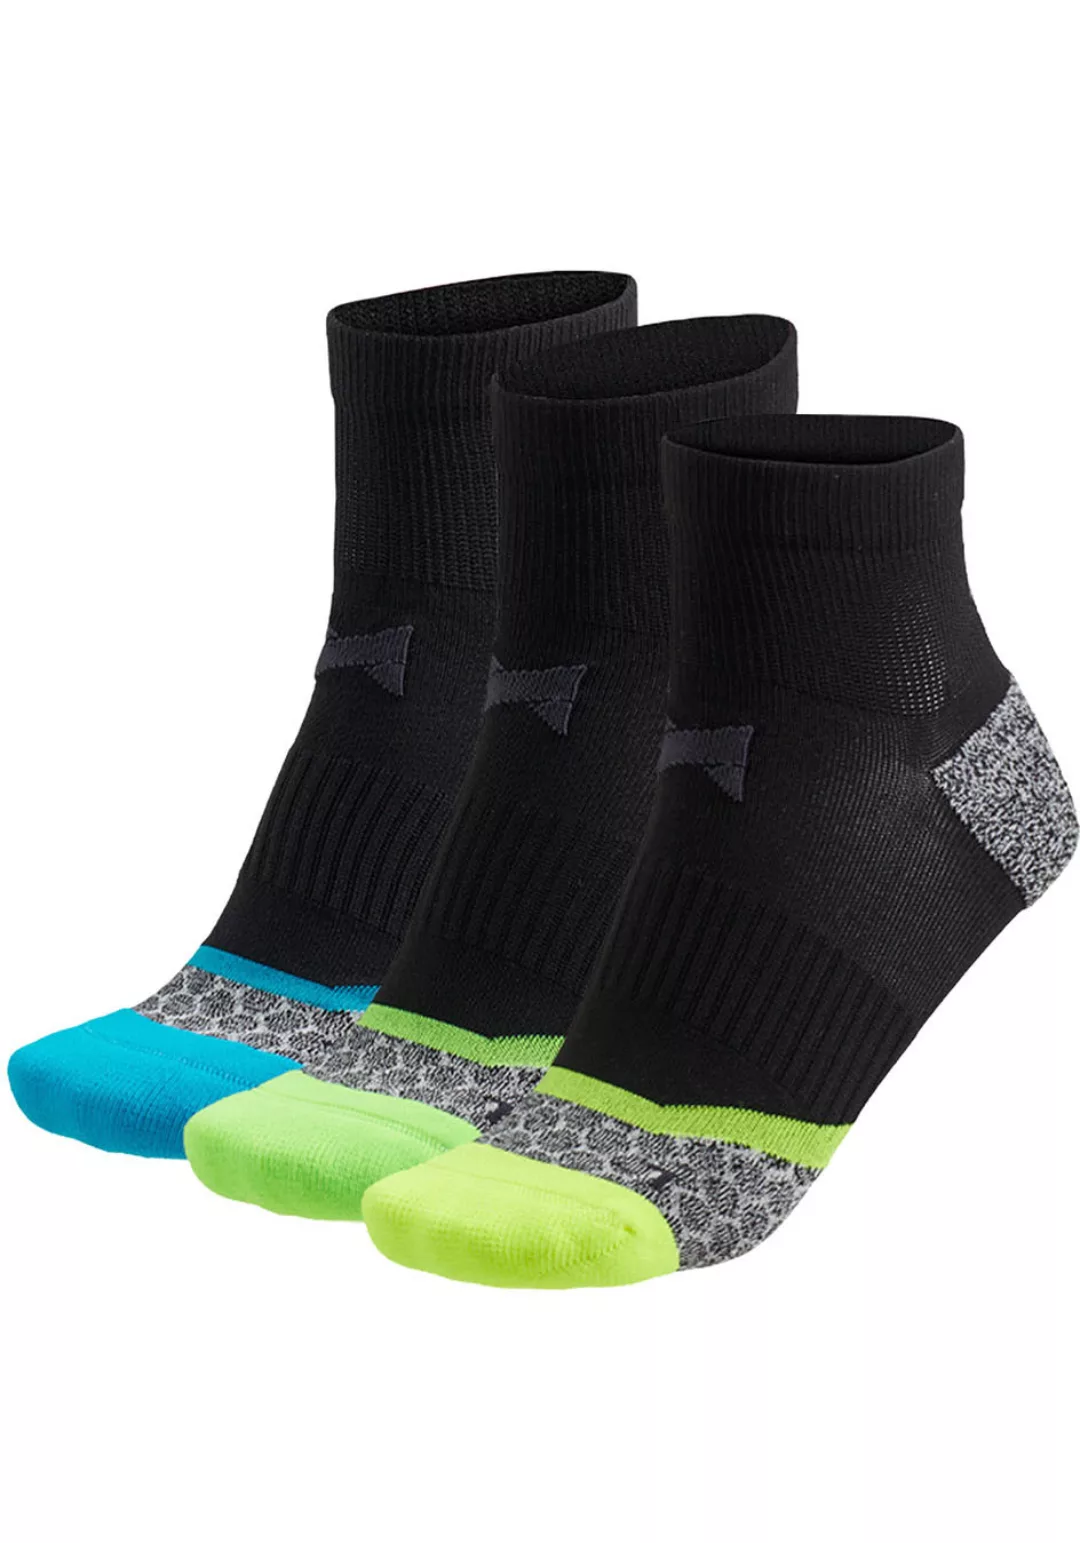 XTREME sockswear Kurzsocken, (3 Paar) günstig online kaufen